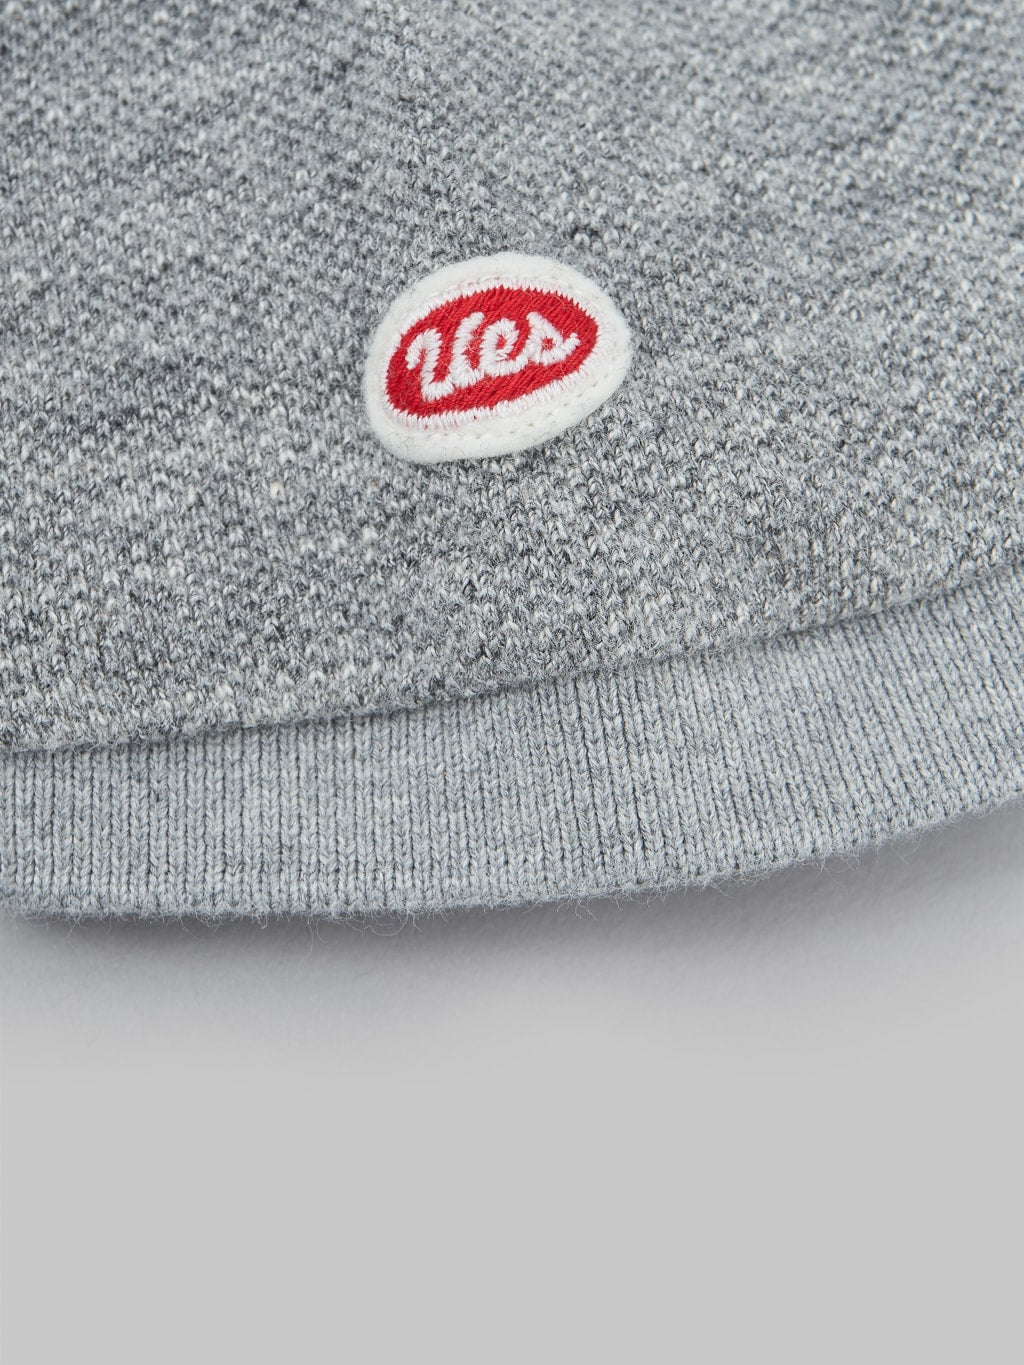 ues polo shirt grey brand logo stitching